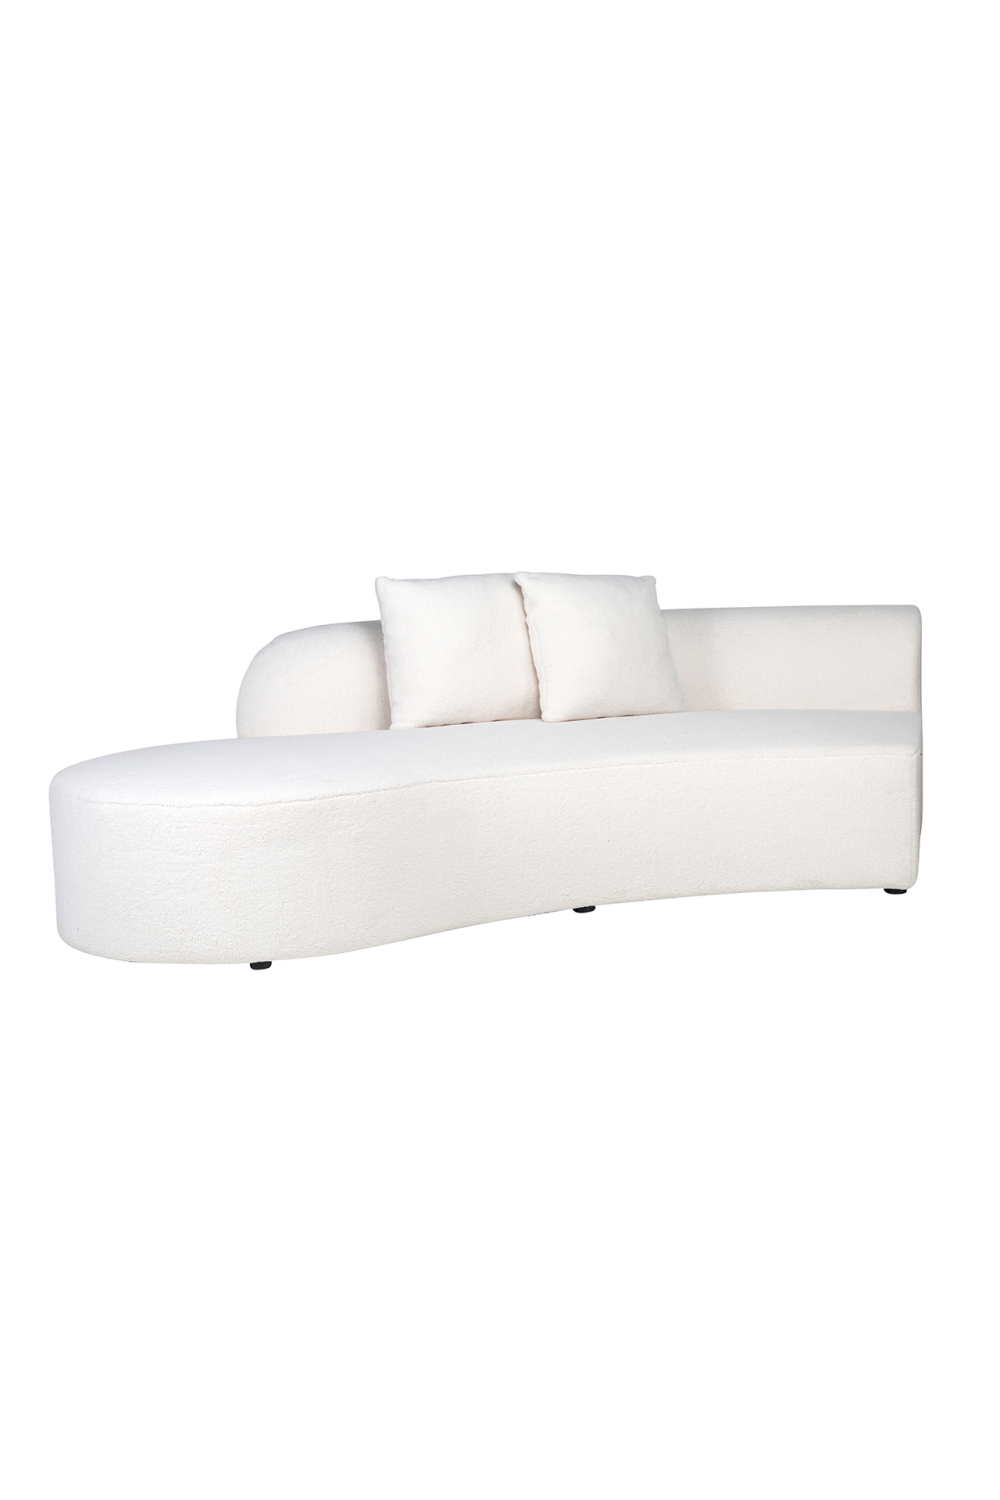 White Curved Upholstered Sofa | OROA Grayson | Oroa.com